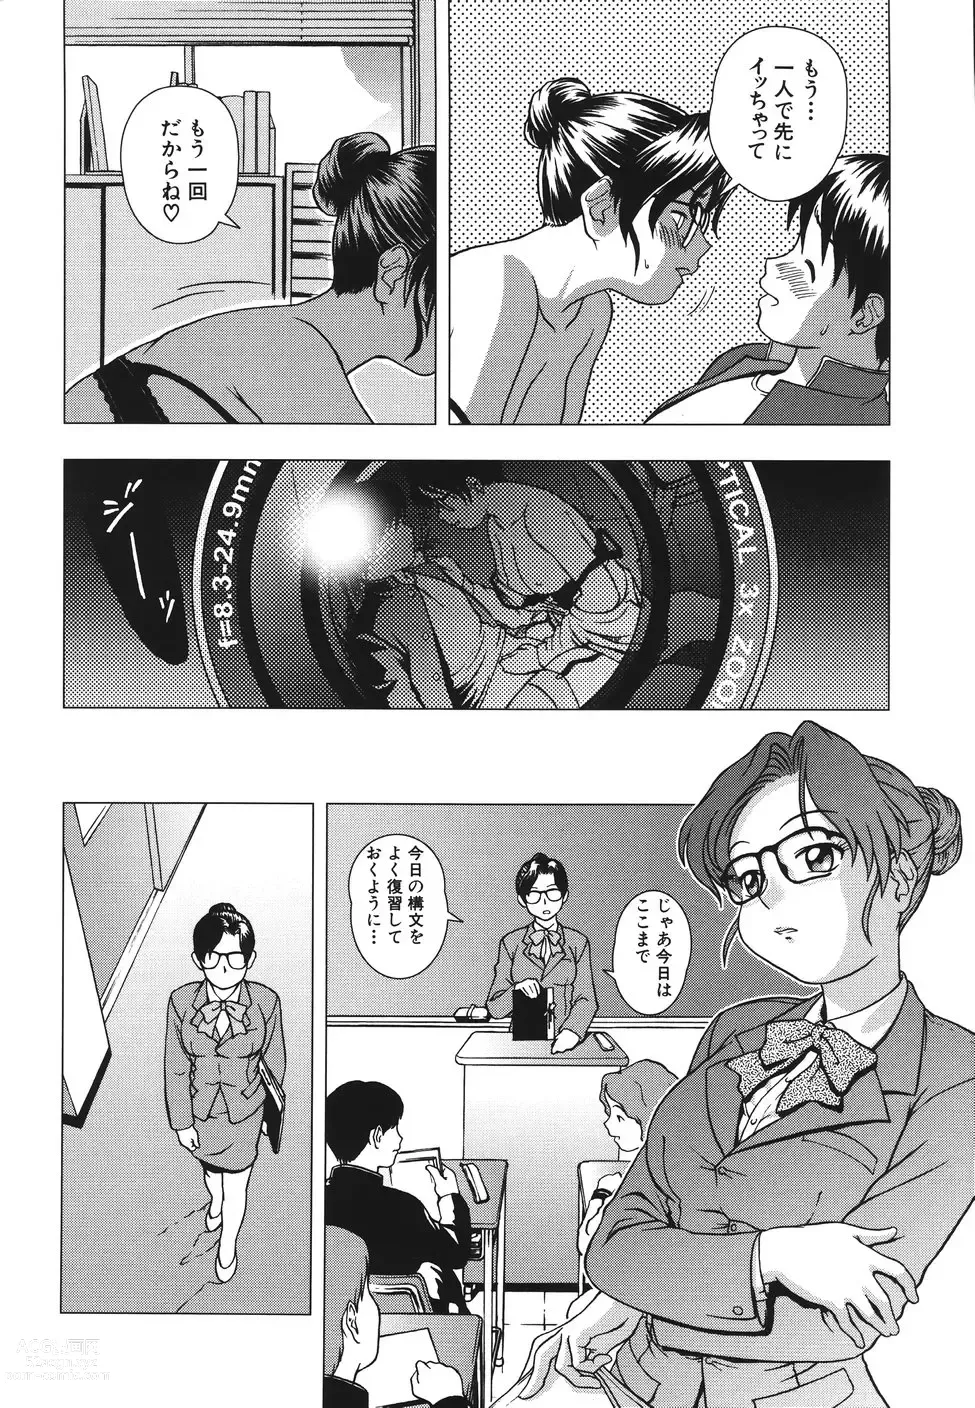 Page 188 of manga Shisupure